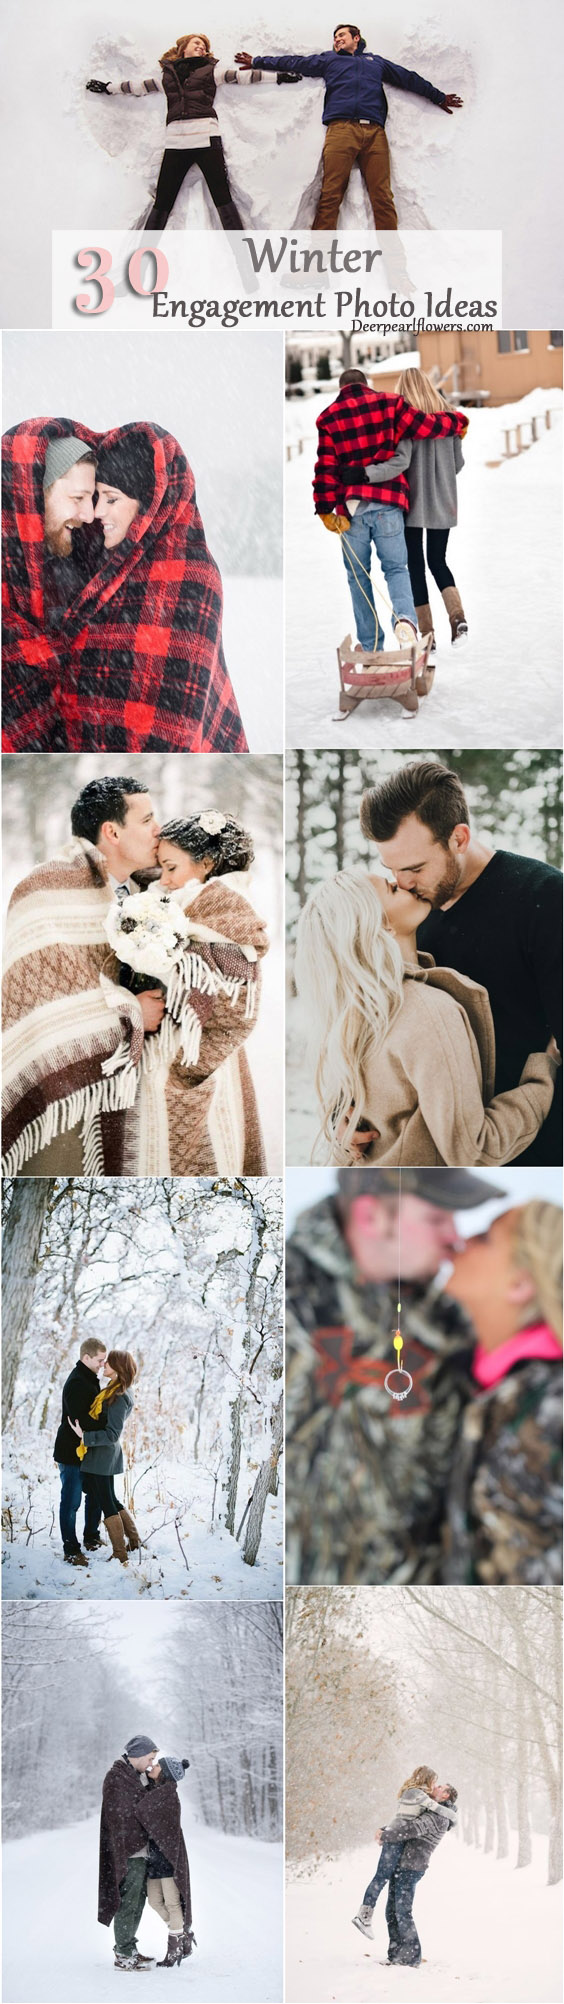 Winter Engagement Photo Ideas